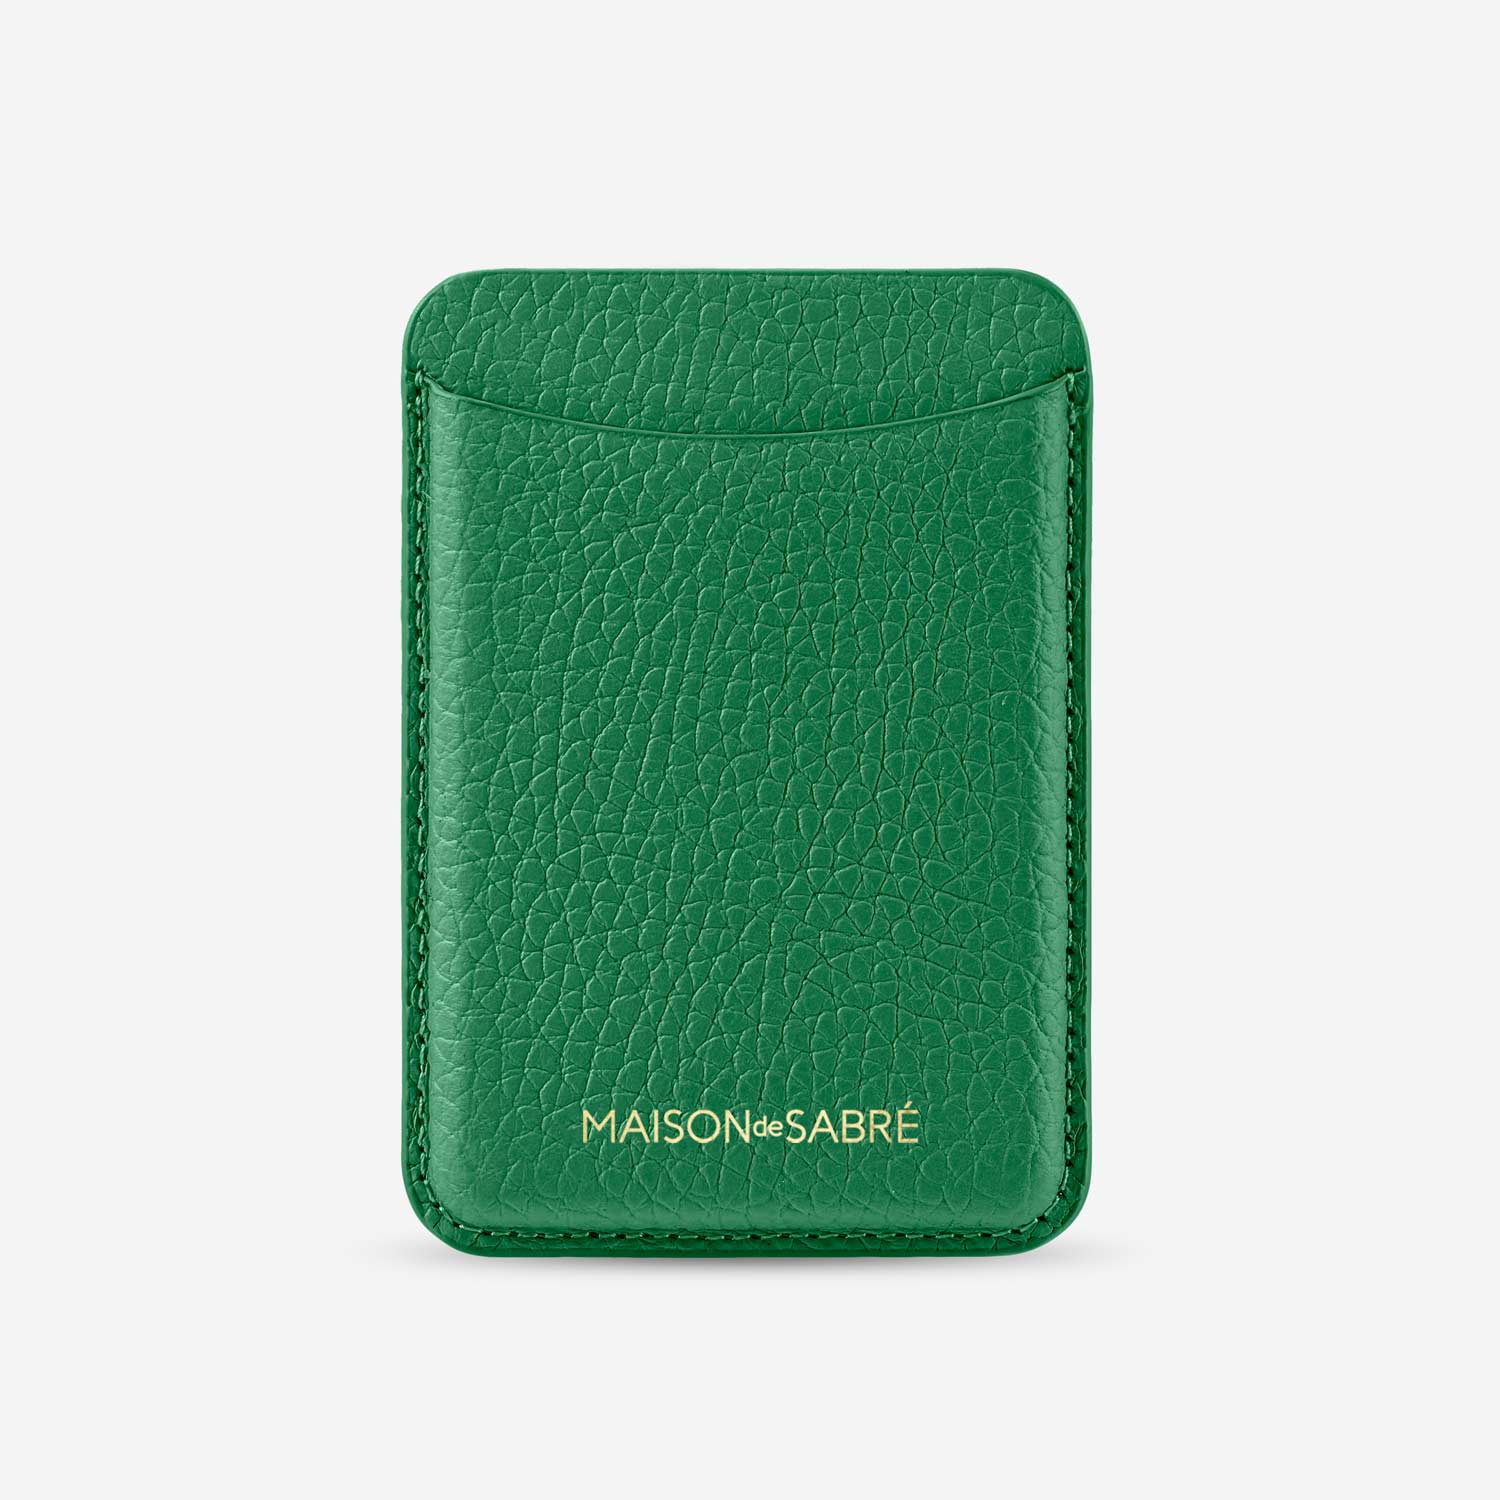 MagSafe Fuchsia Leather Wallet